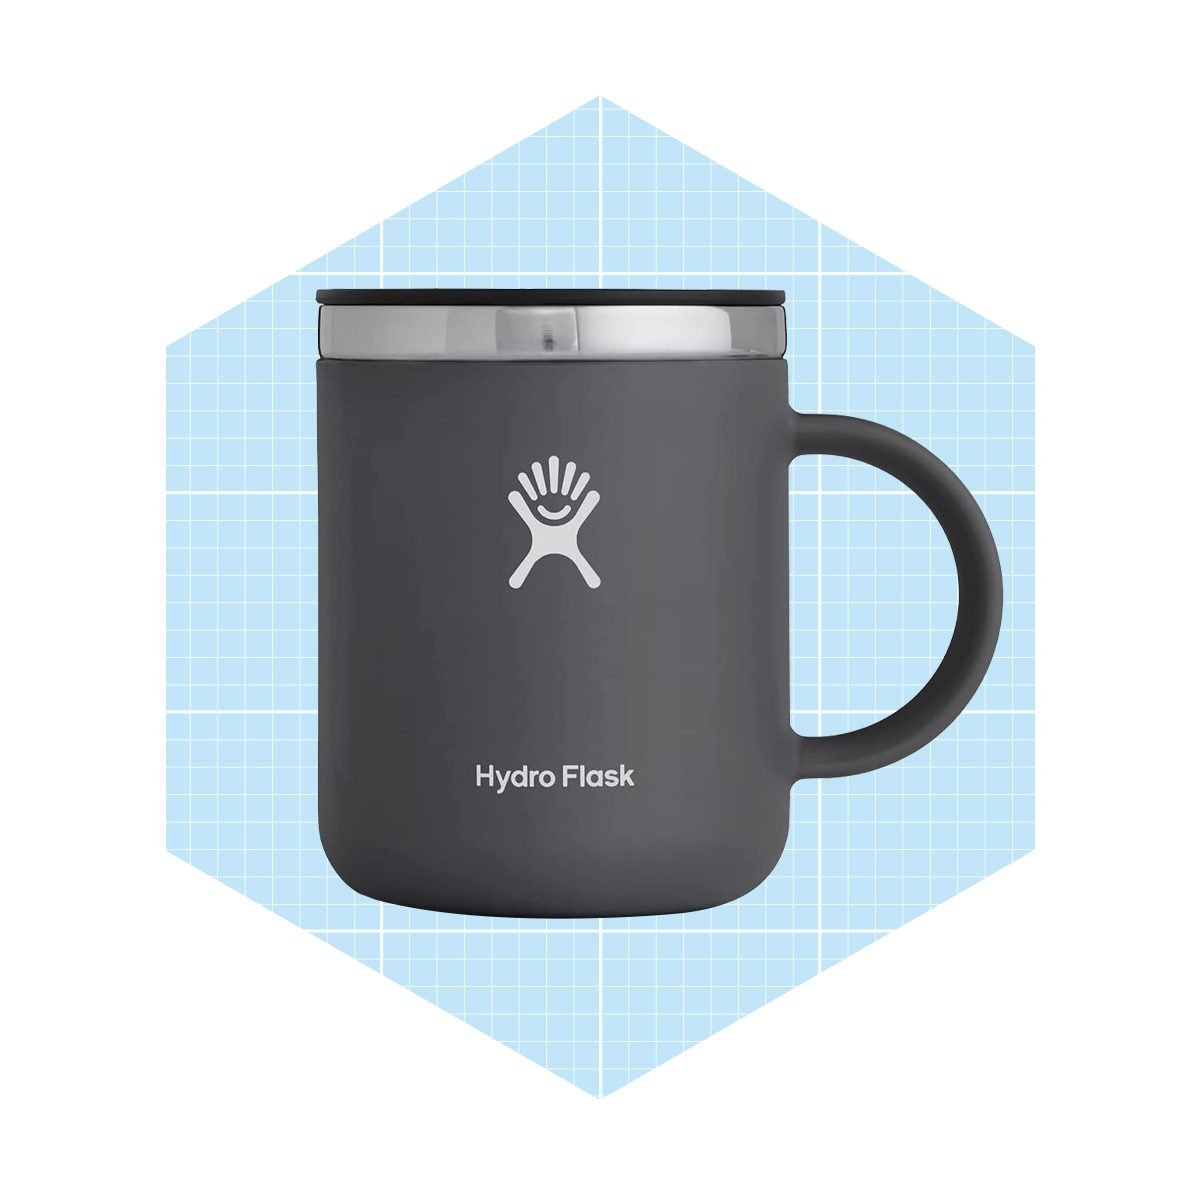 Hydro Flask Mug Ecomm Amazon.com